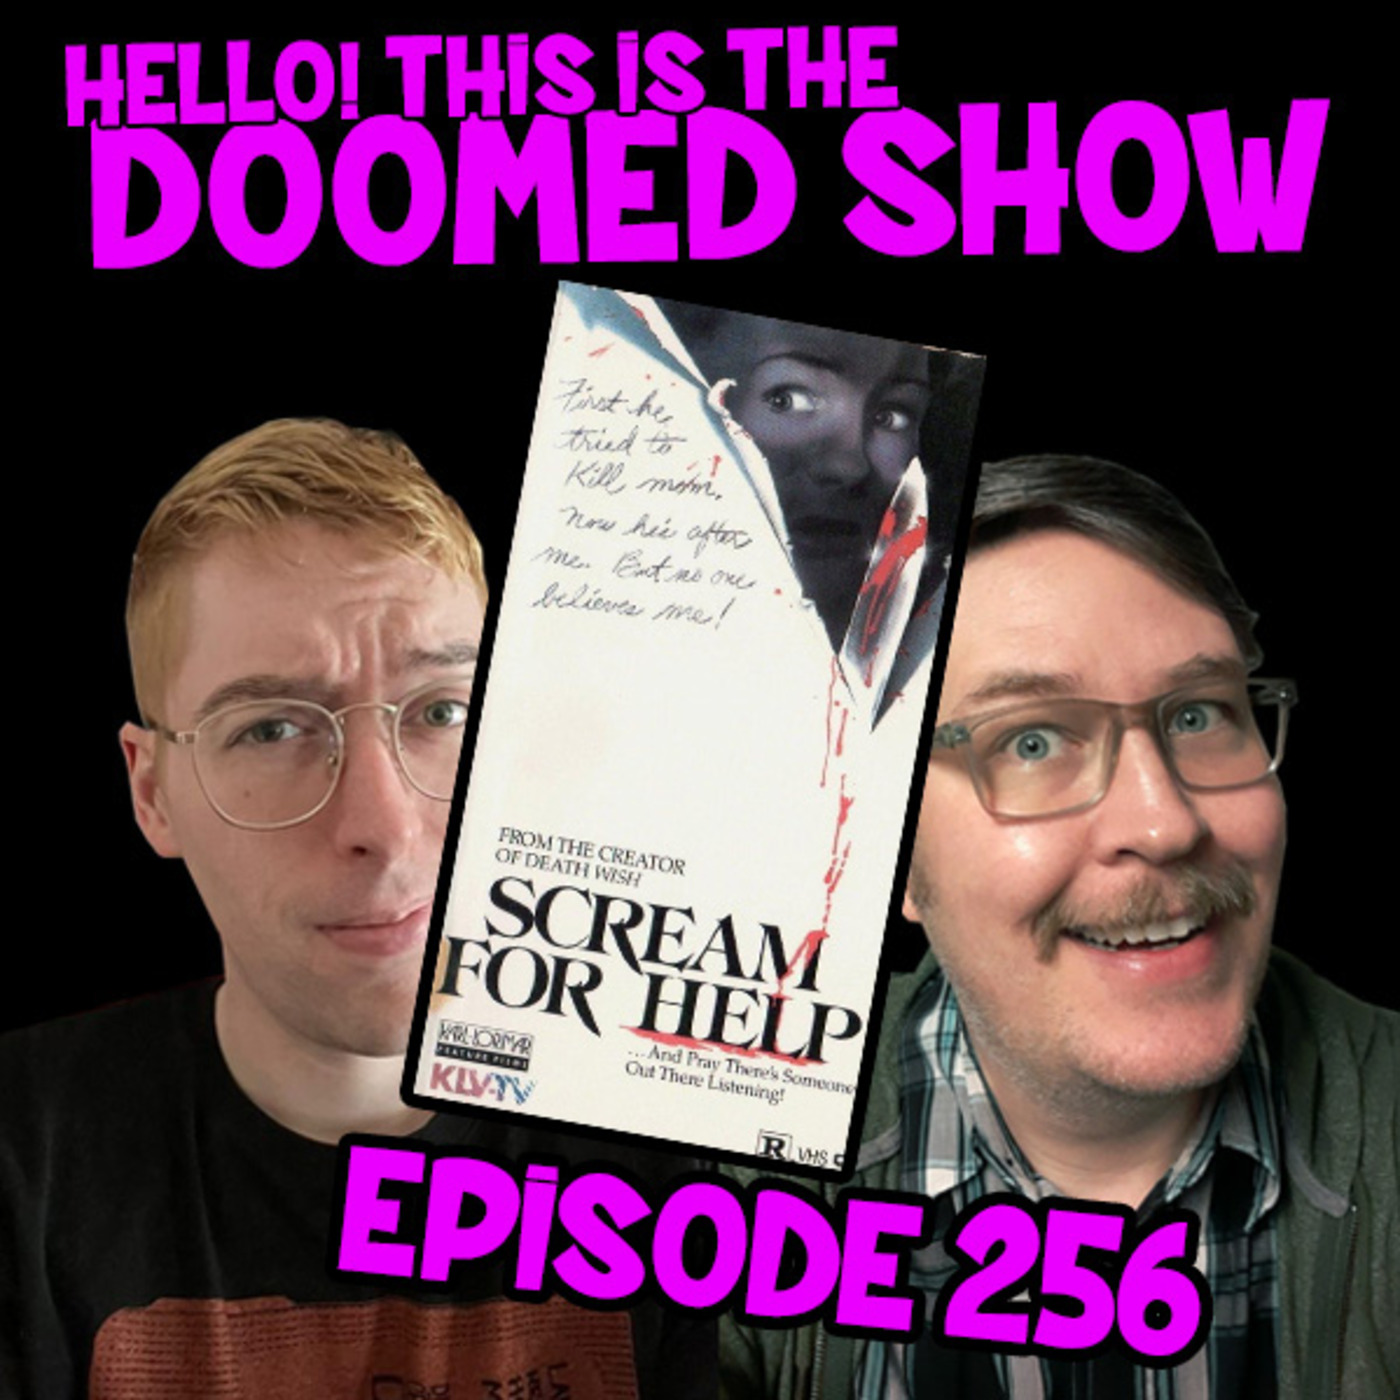 Episode 256: H!TITDS #256 - Scream for Help